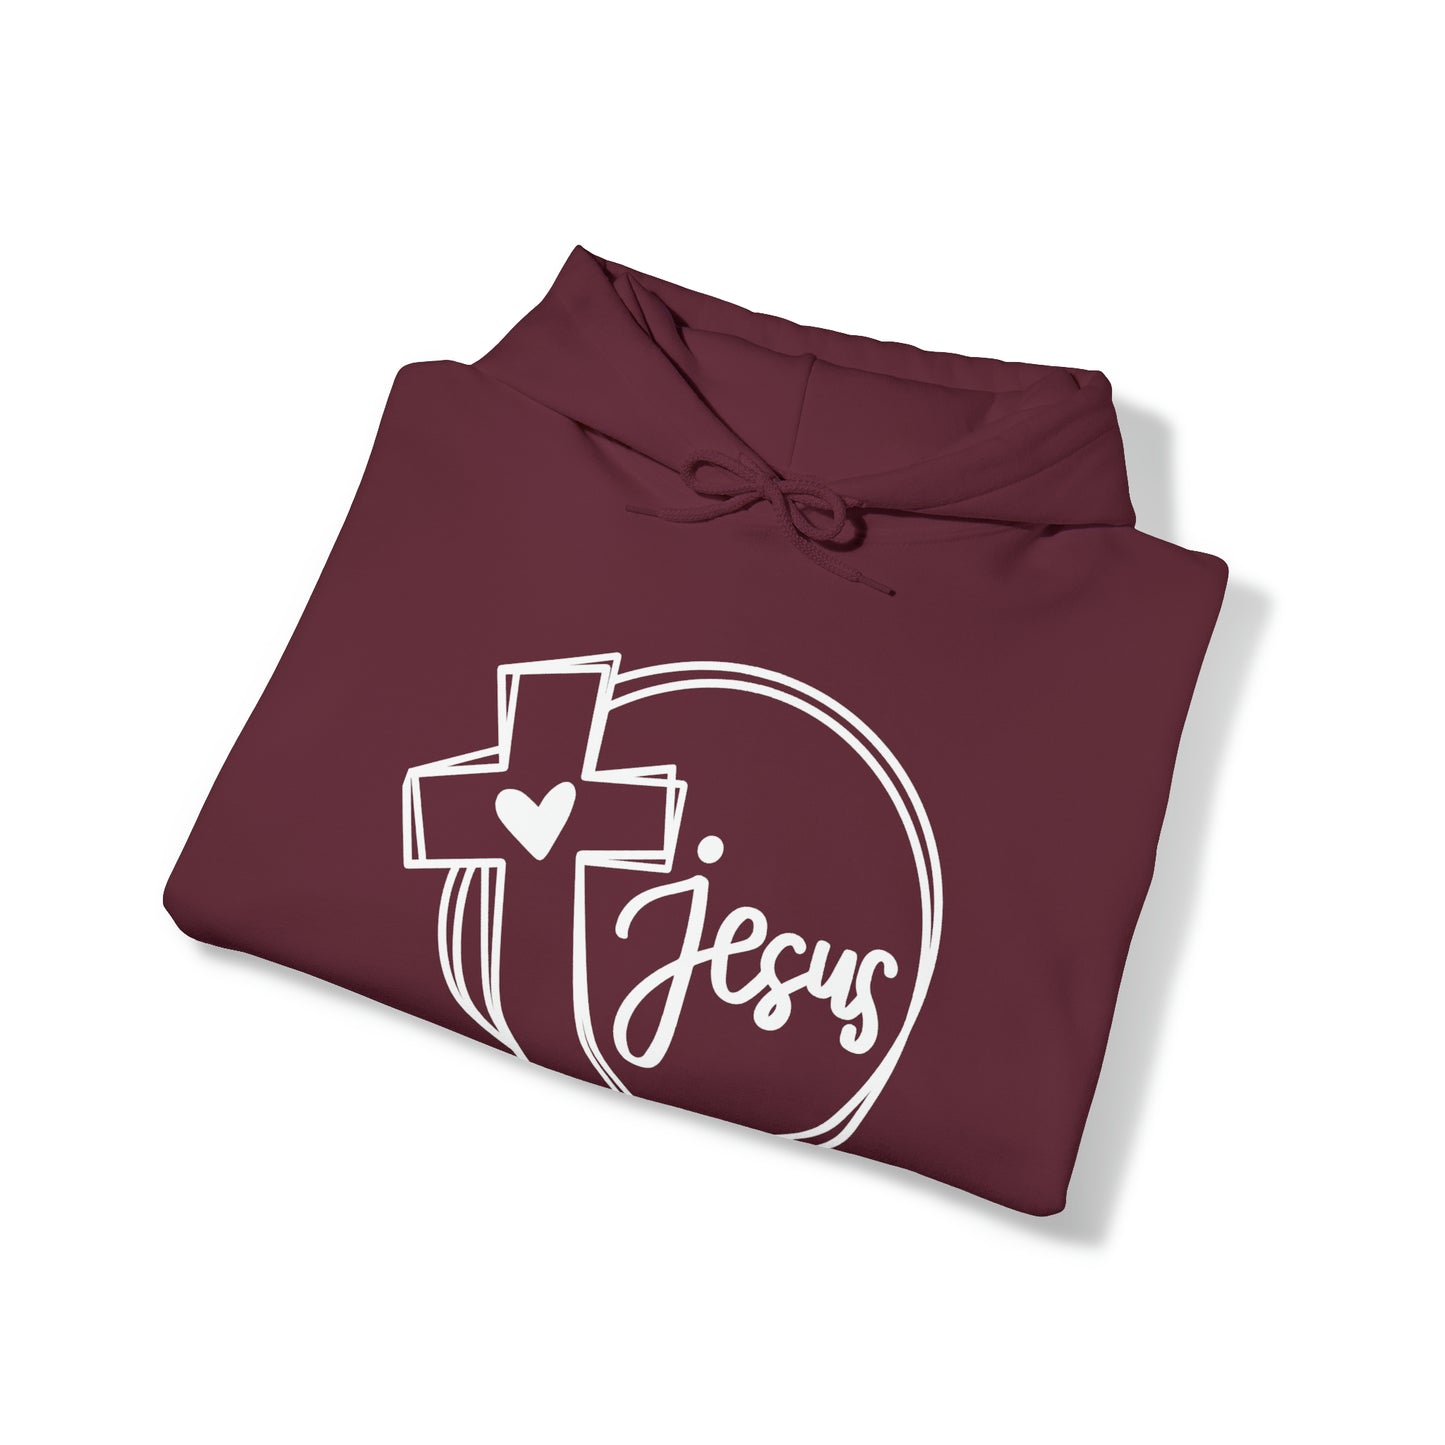 Love Jesus Unisex Heavy Blend™ Hooded Sweatshirt